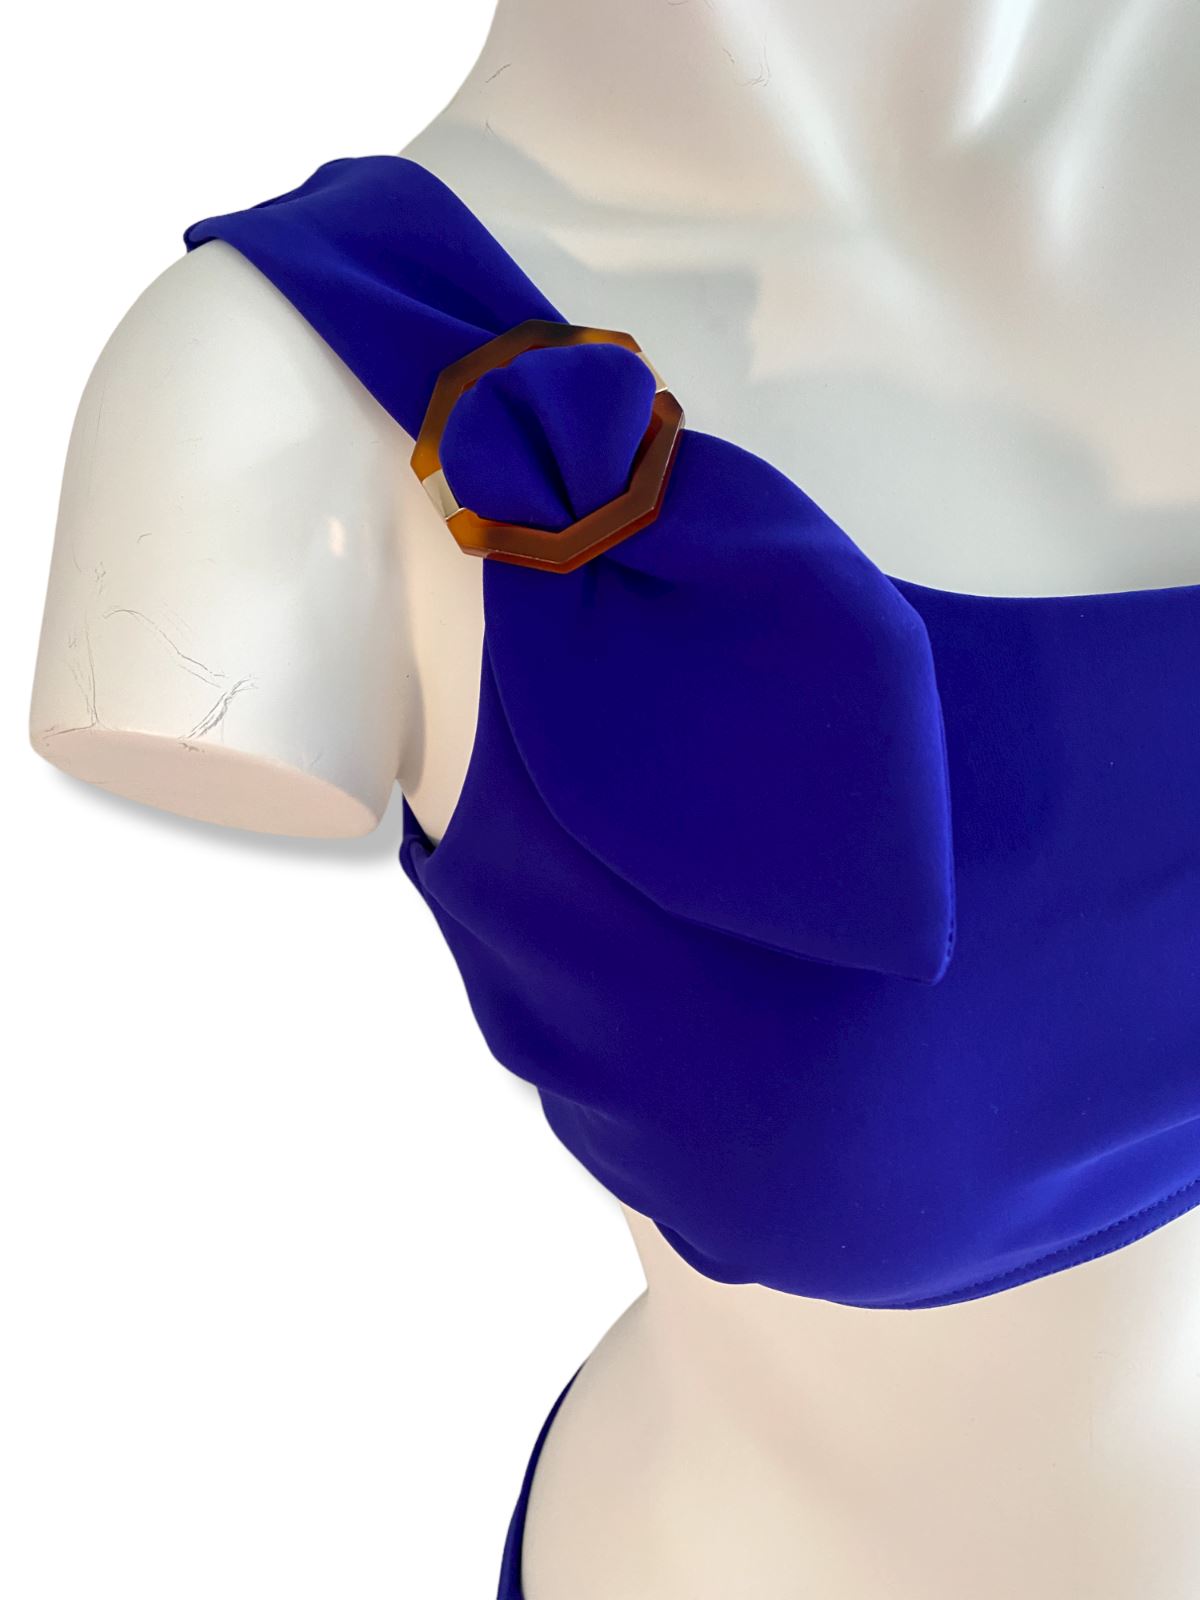 Zimmermann Nina Buckle  Bikini | One Shoulder, Royal Blue, Tortoiseshell Clasp